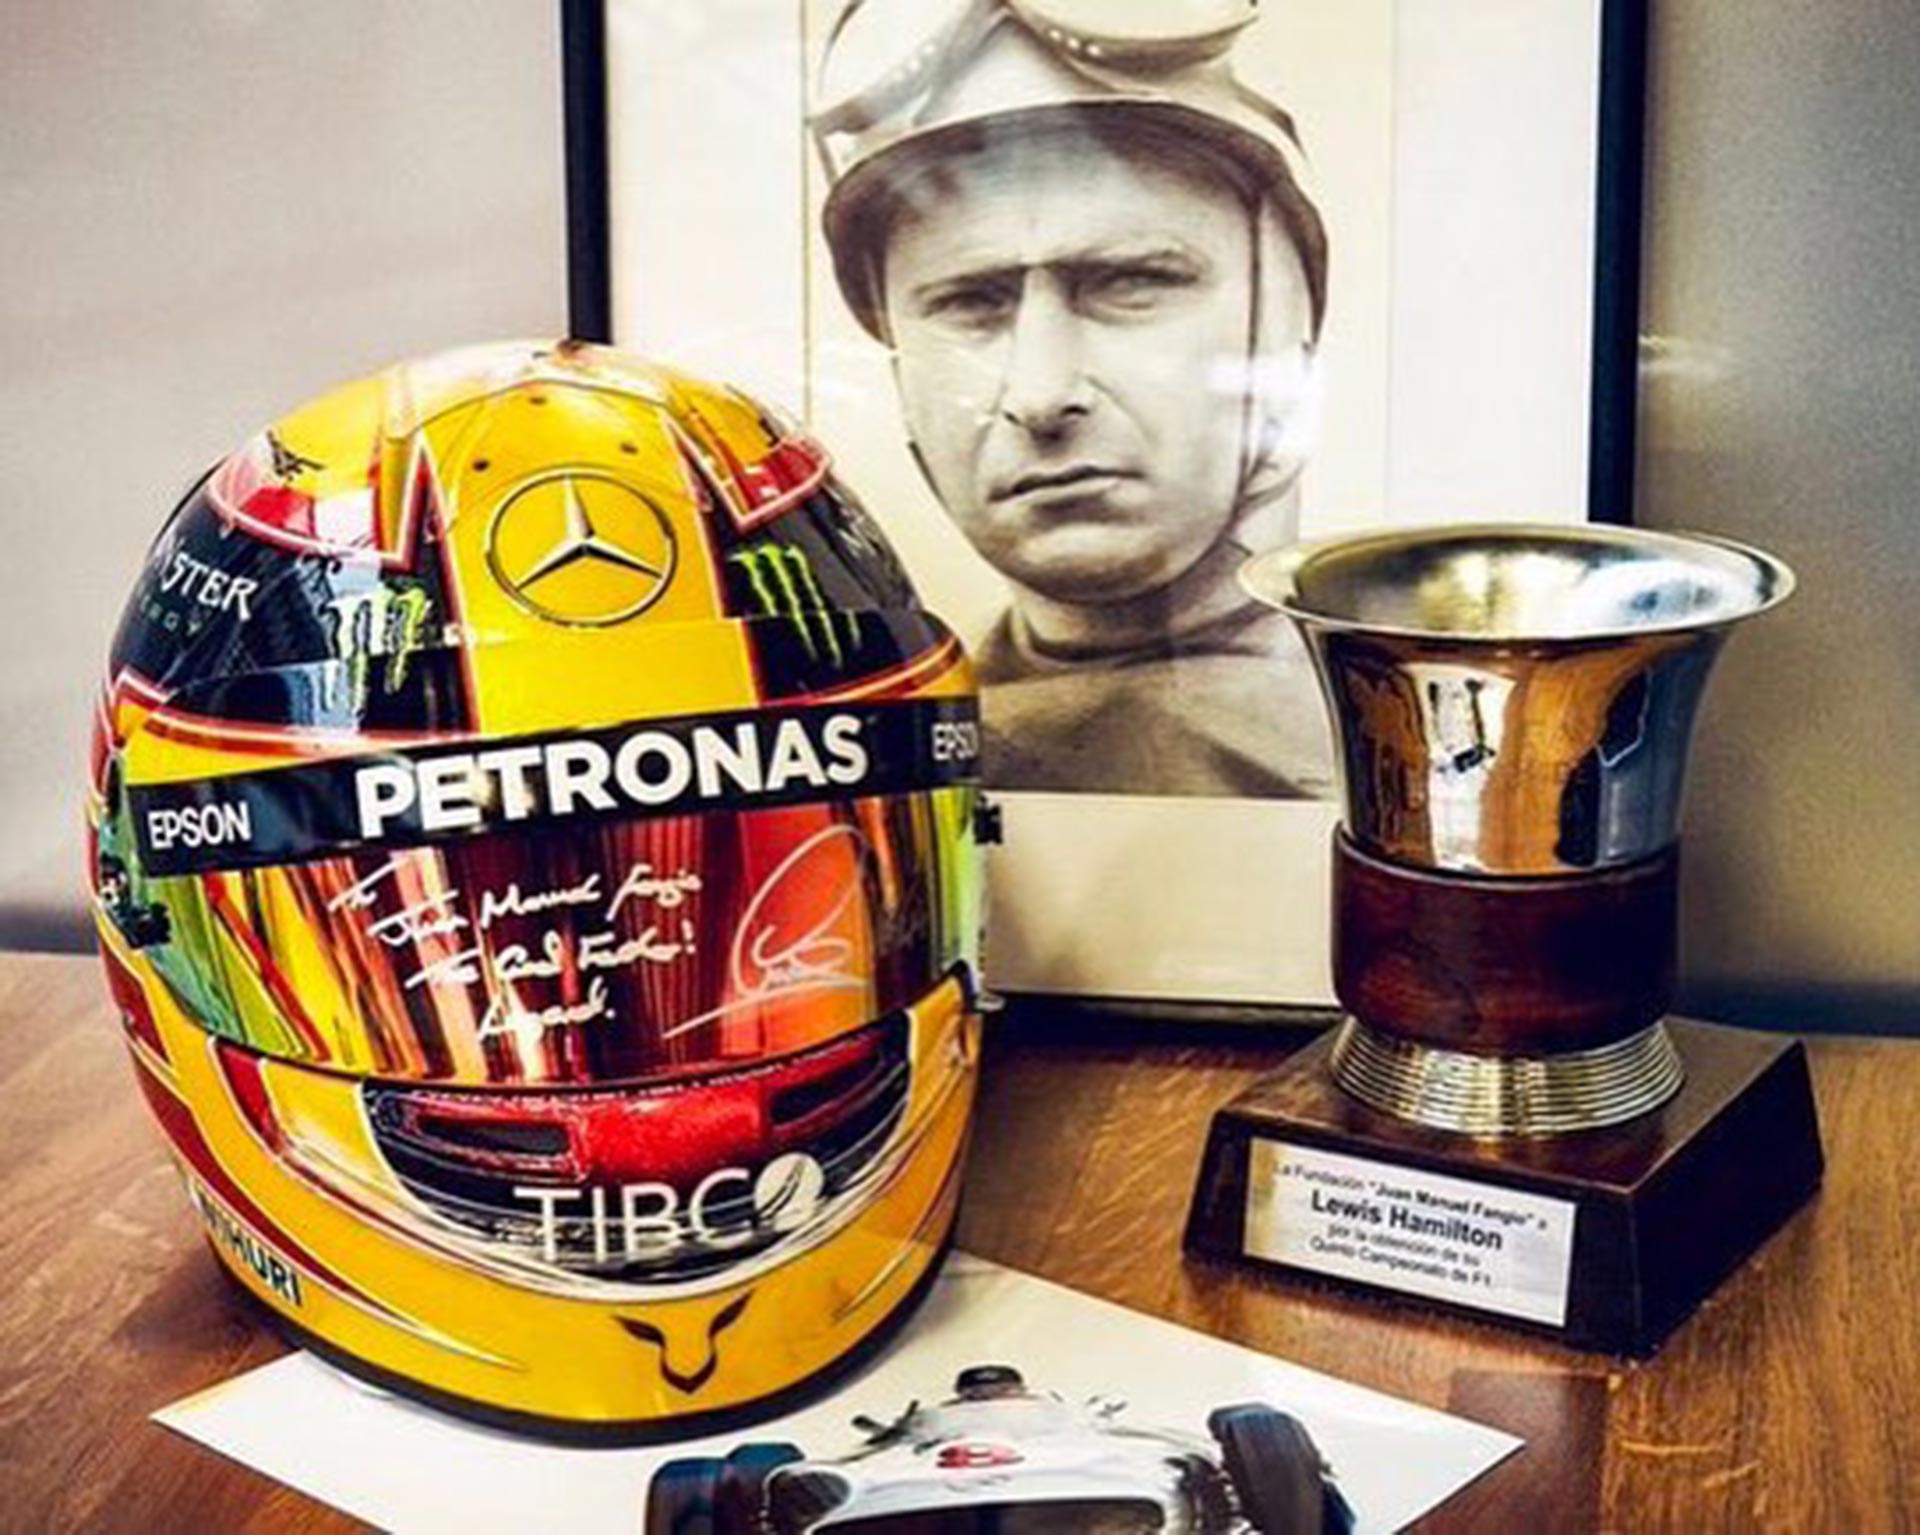 El casco que donó al Museo Juan Manuel Fangio (@museo_fangio)